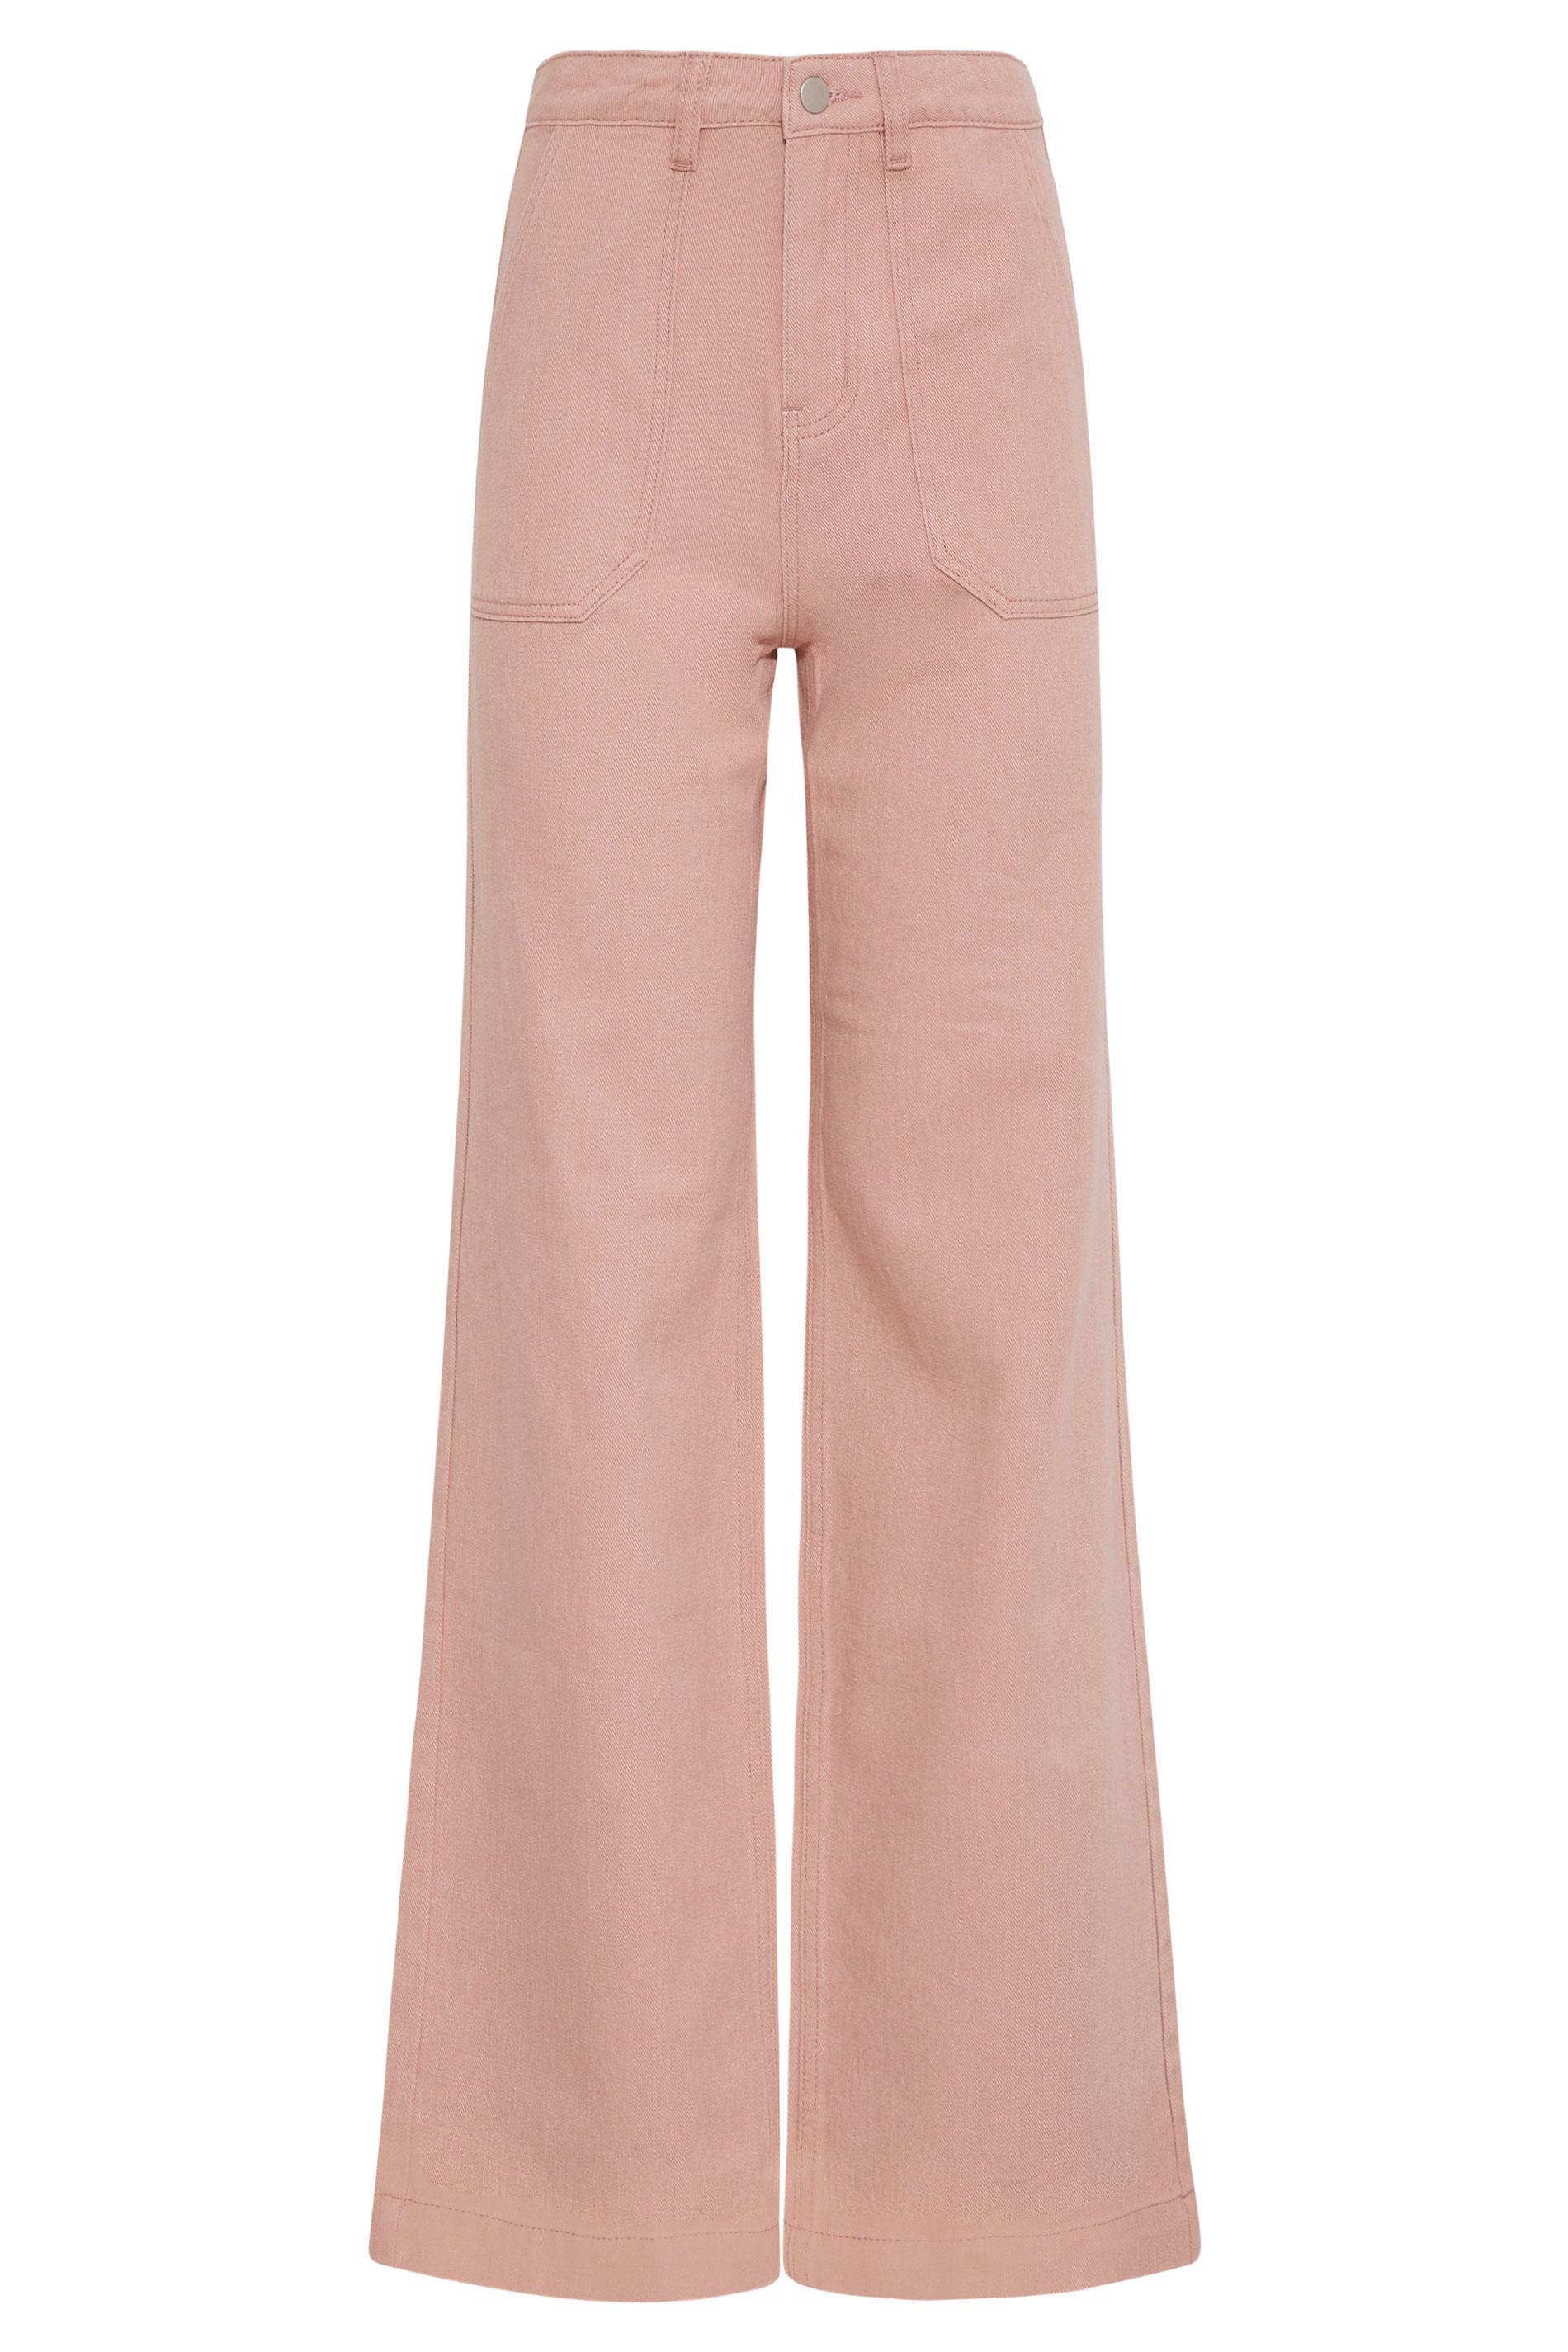 LTS Tall Women's Pink Cotton Twill Wide Leg Trousers | Long Tall Sally 3